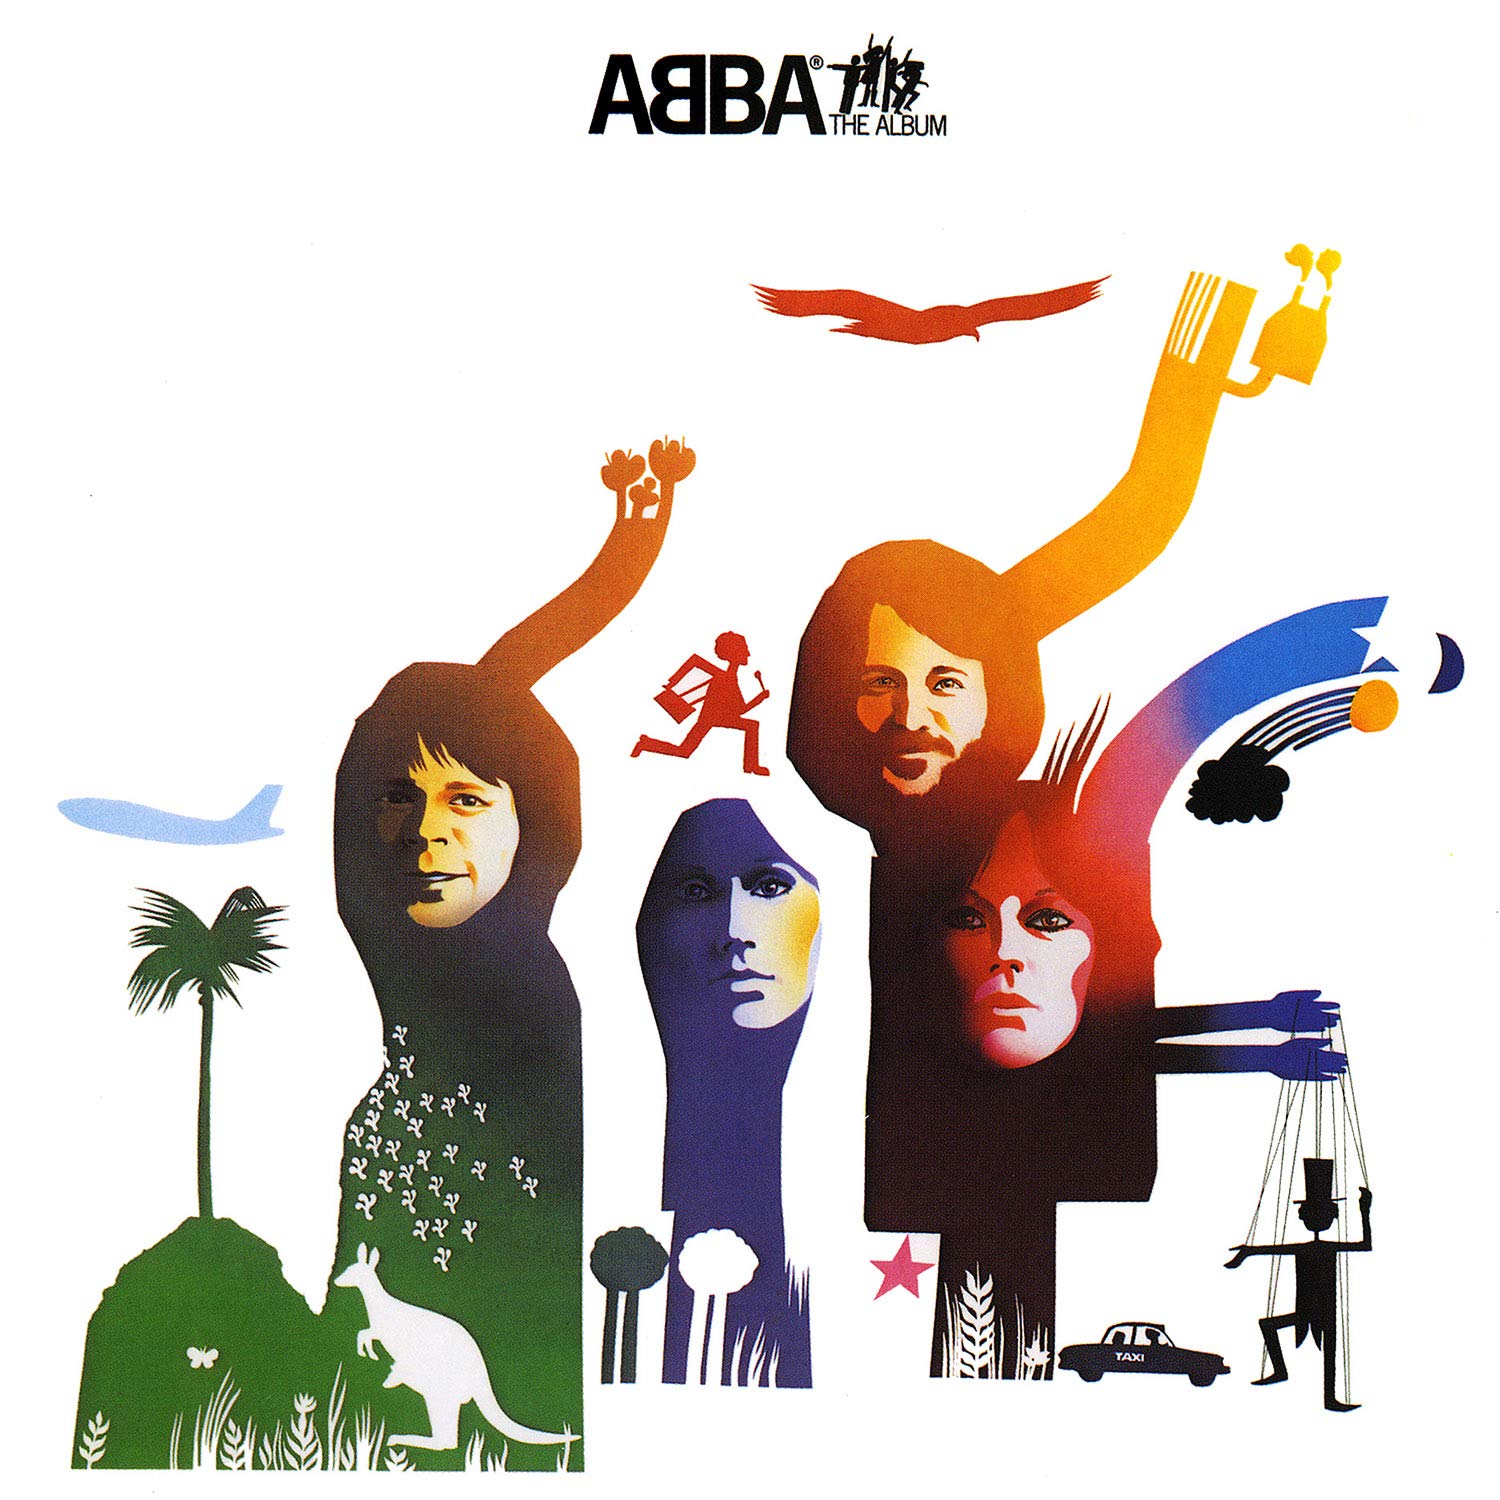 ABBA Album Reviews